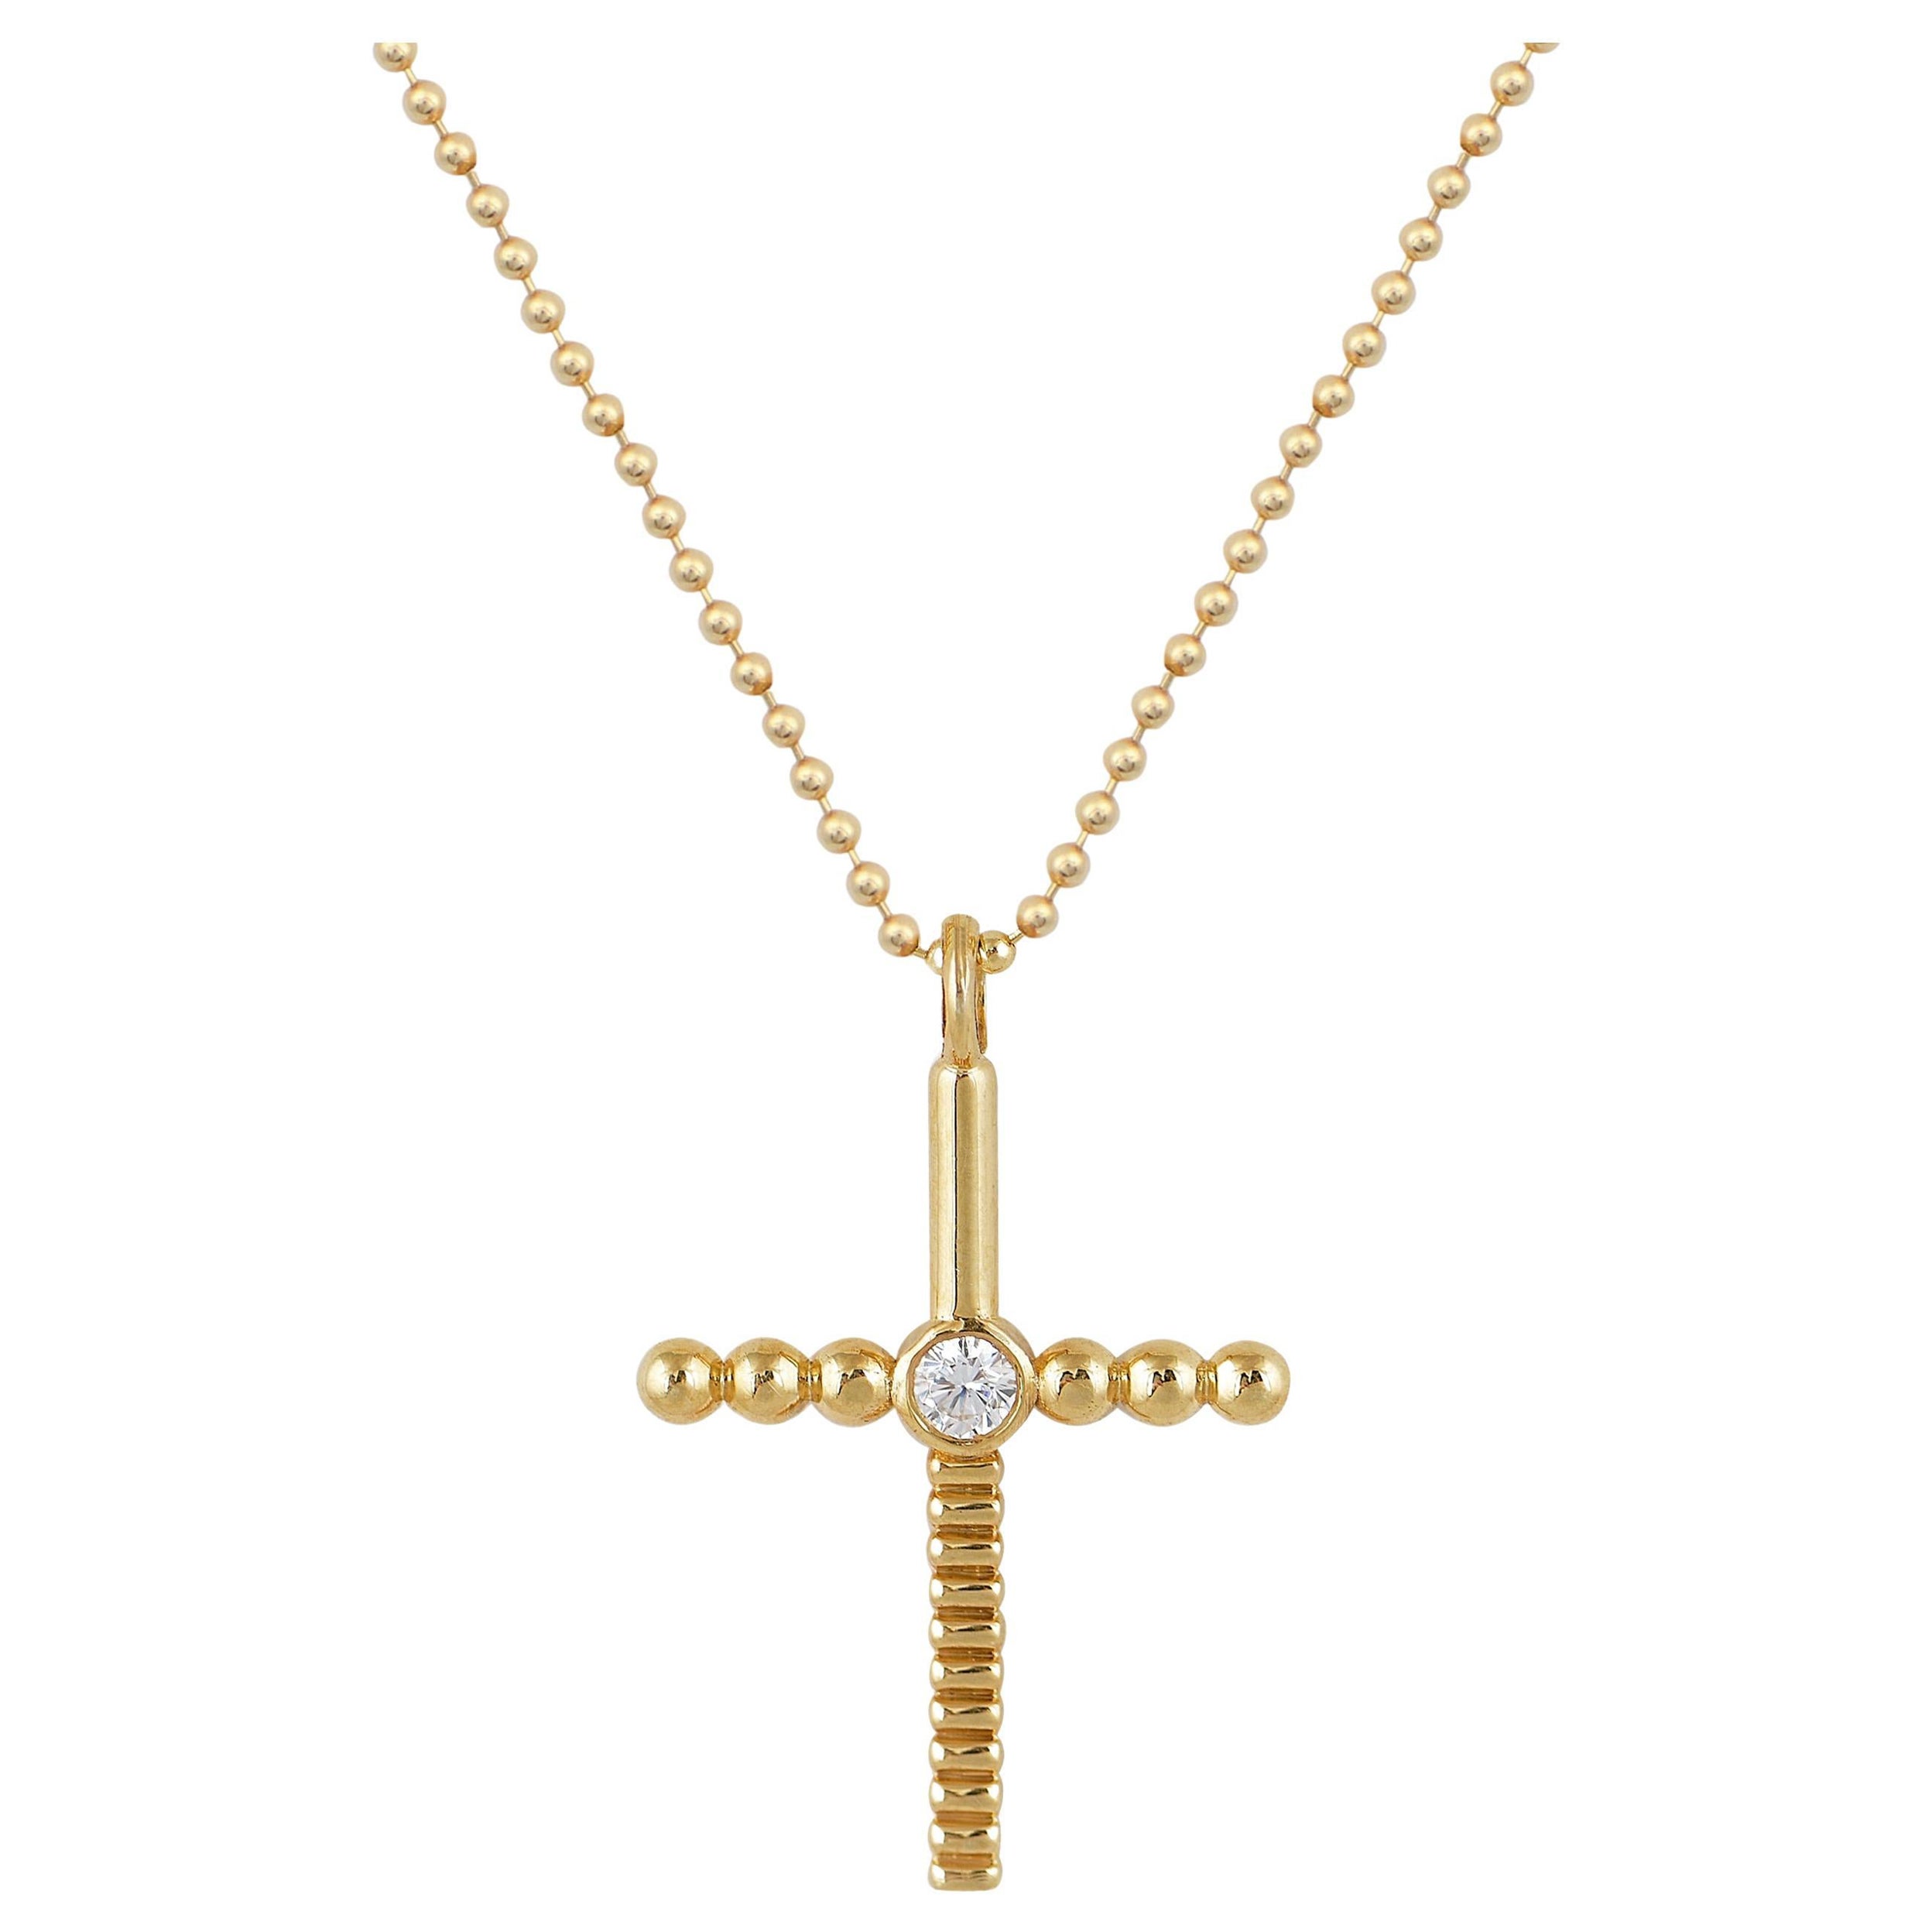 Interchangeable Cross Pendant in 18 Karat Yellow Gold with a Diamond